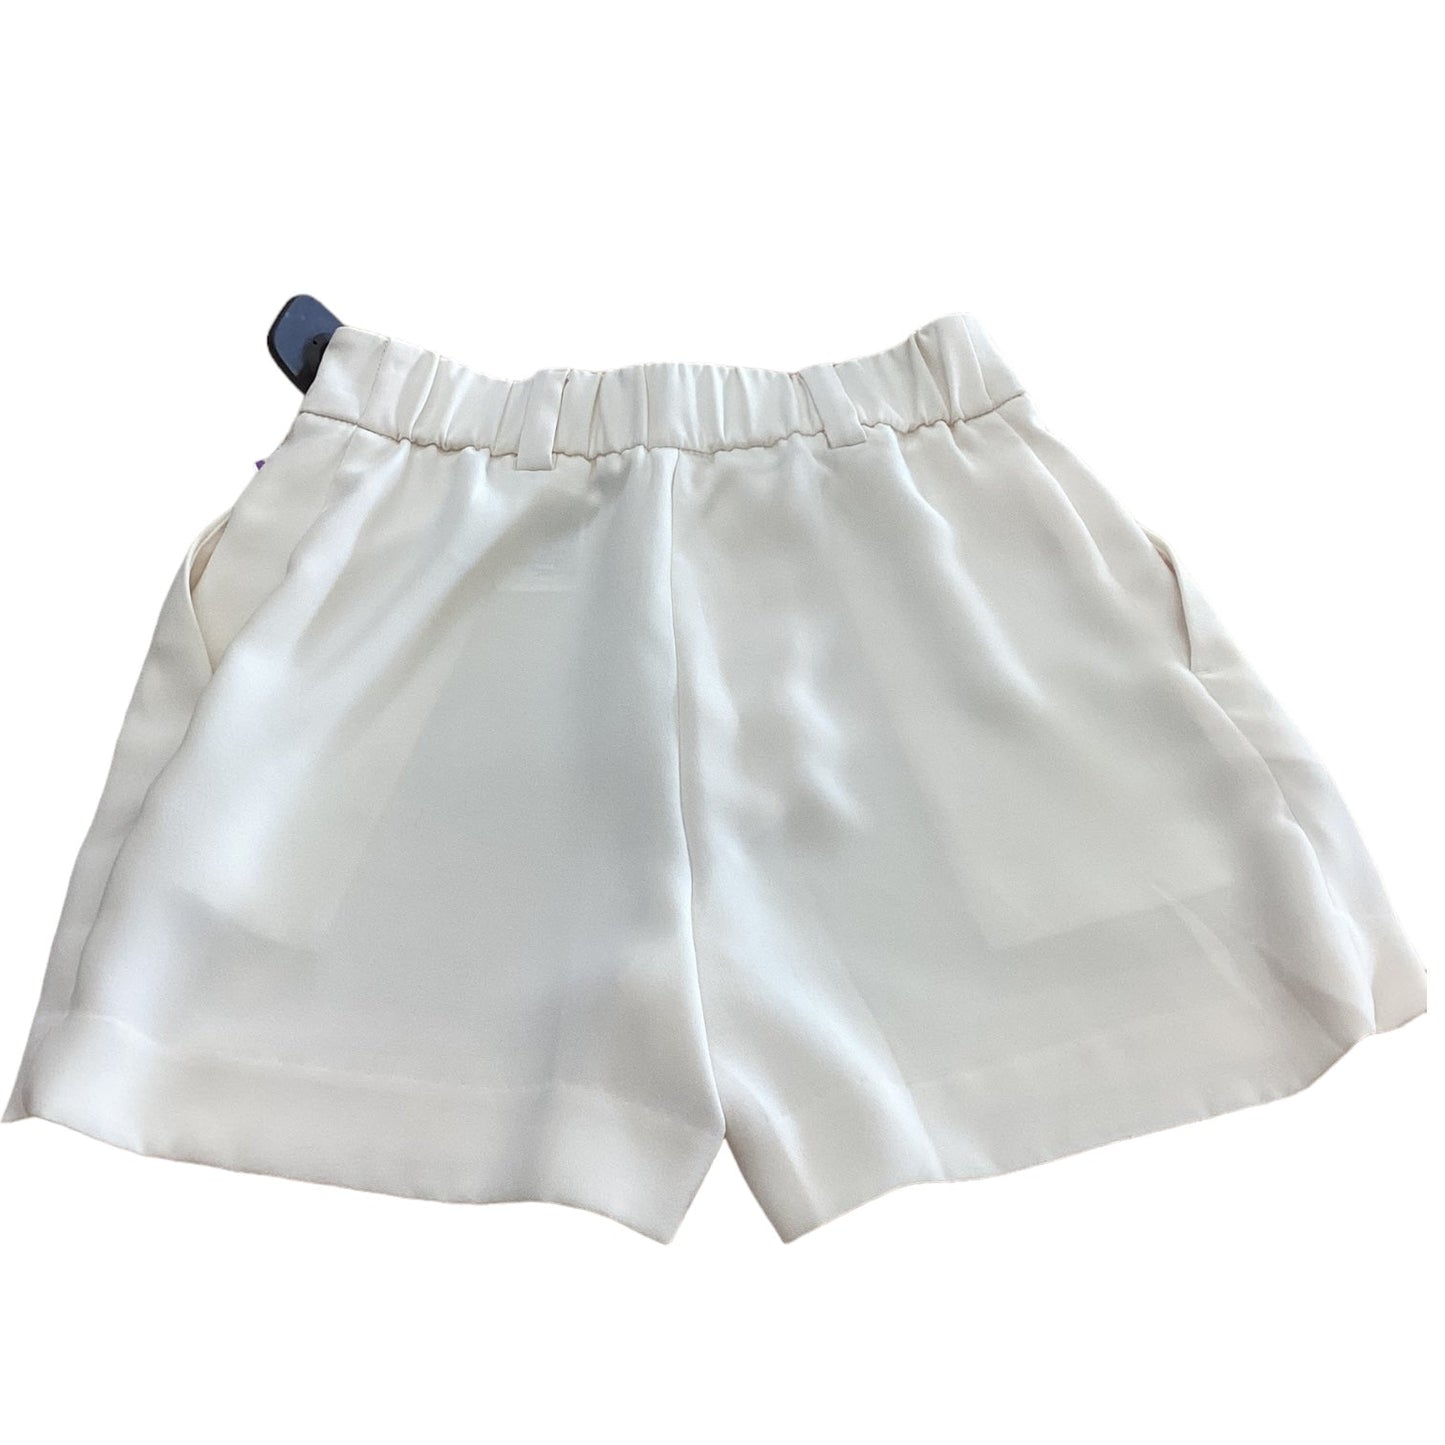 Cream Shorts H&m, Size 0